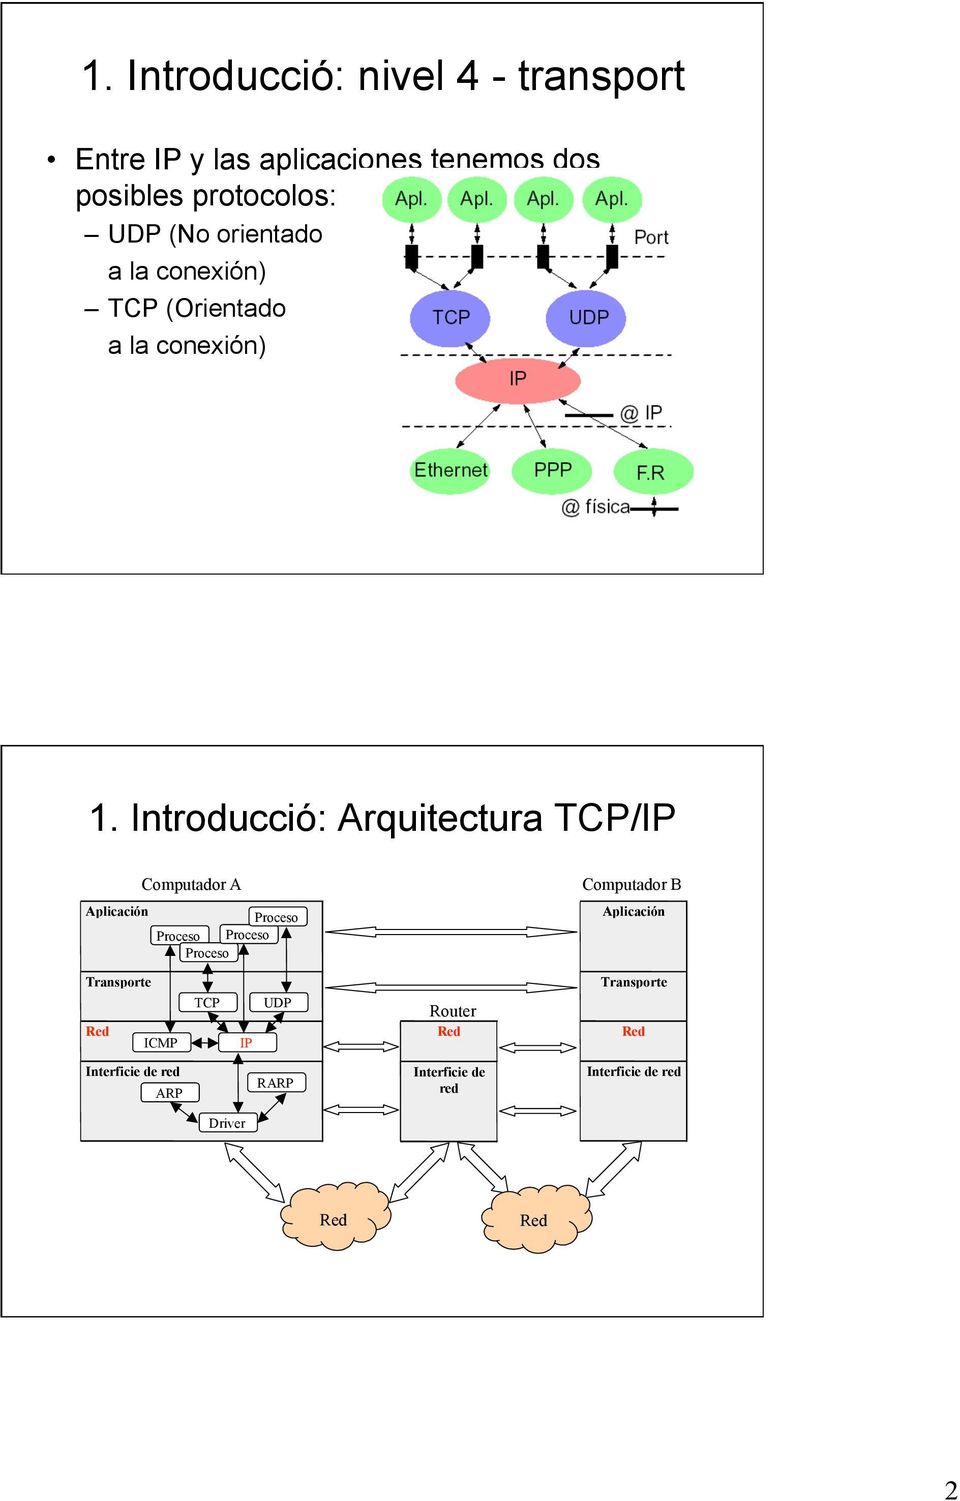 Introducció: Arquitectura TCP/IP Aplicación Computador A Proceso Proceso Proceso Proceso Computador B